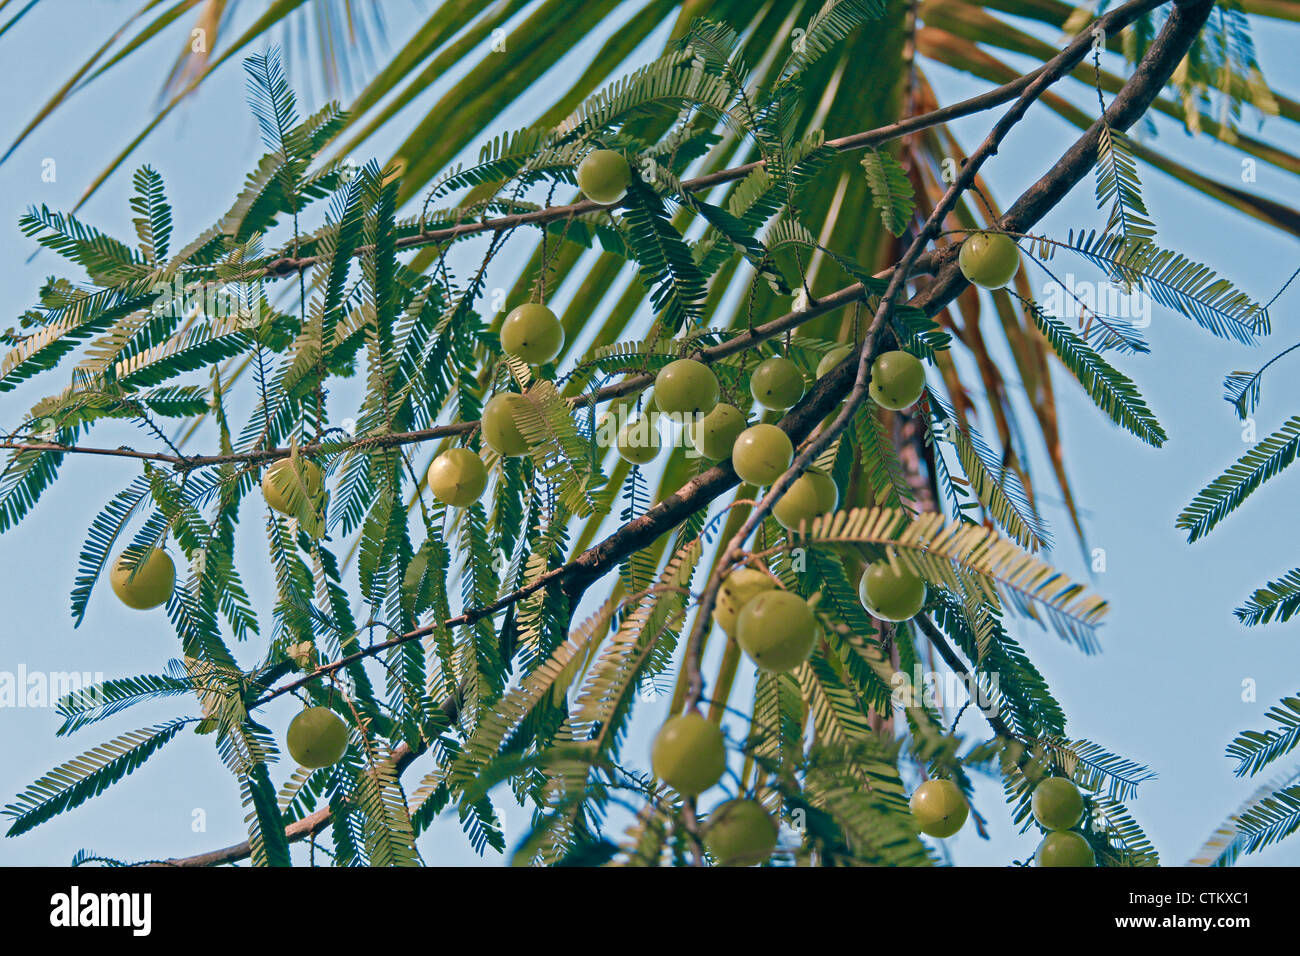 Amla, Emblica officinalis, Indian Gooseberries growing on tree, Ayurvedic medicine and herb fruits. Stock Photo